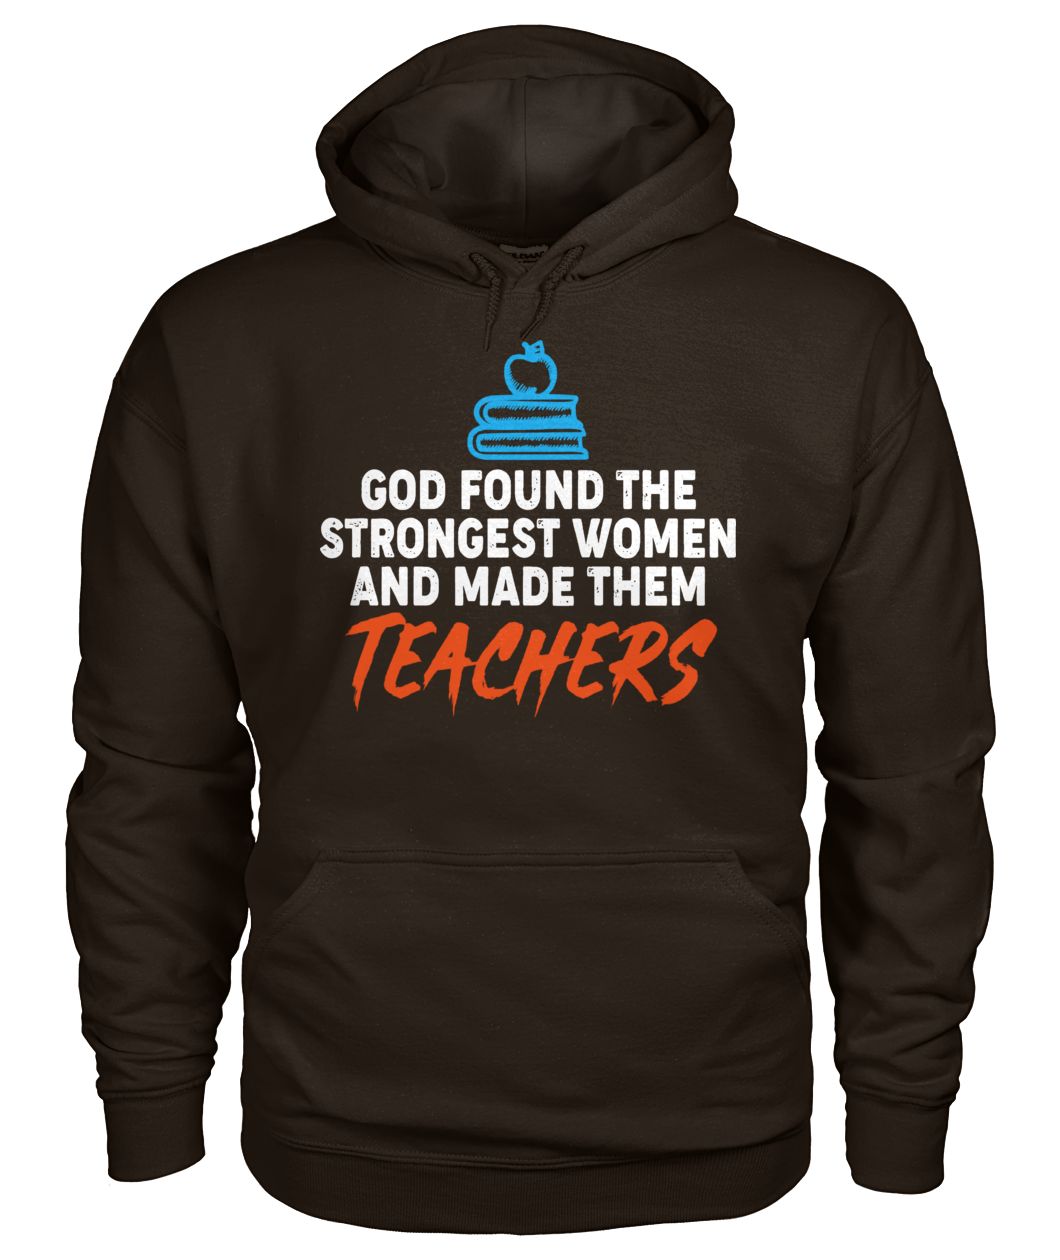 God found the strongest women and made them teachers gildan hoodie